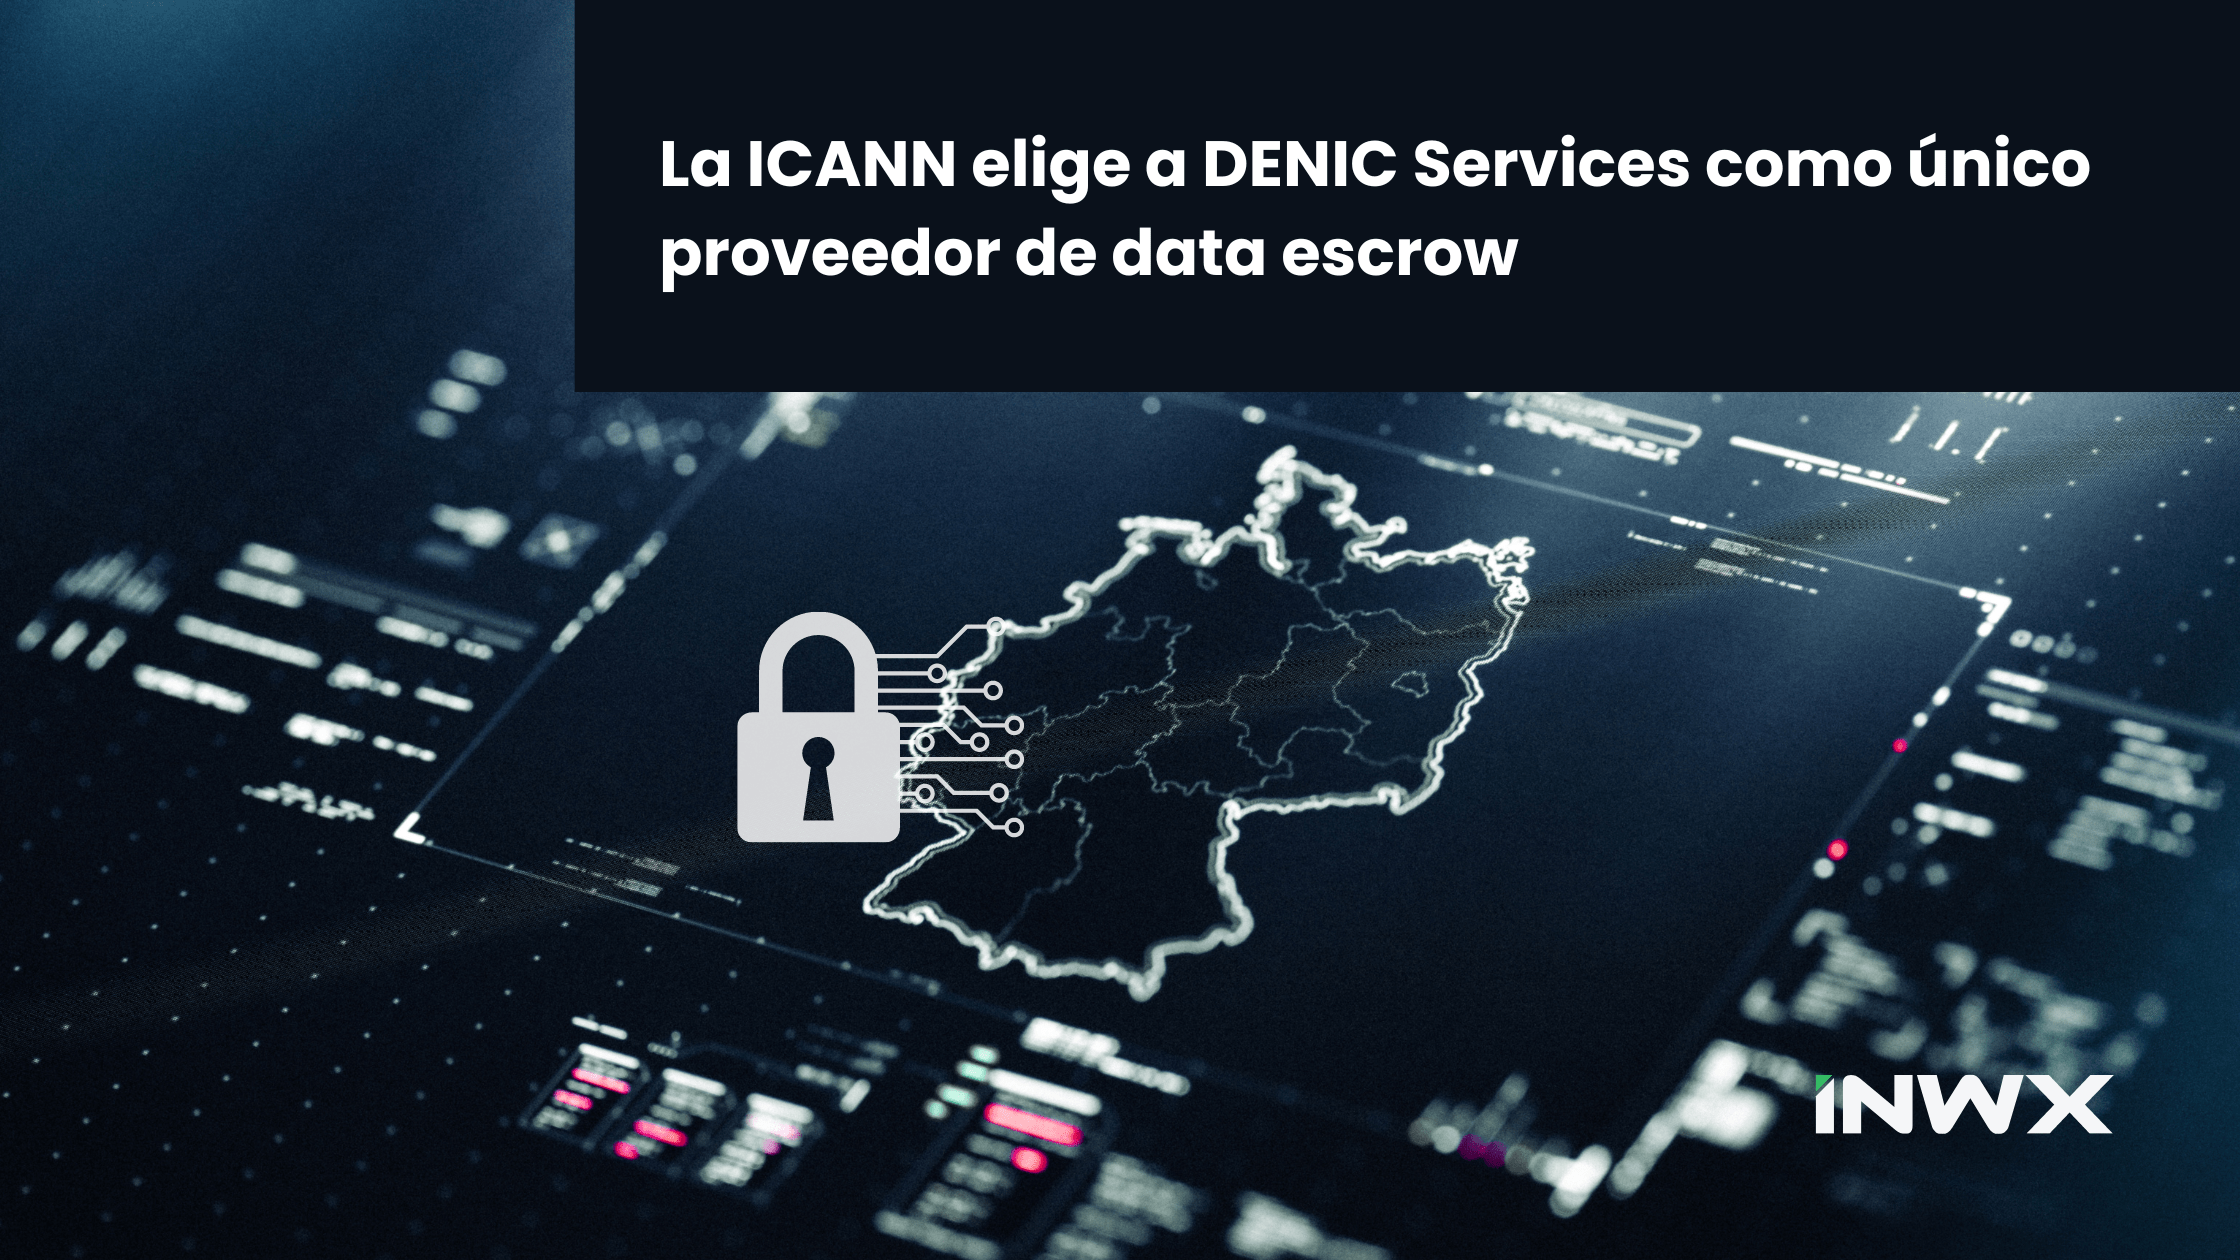 La ICANN elige a DENIC Services como único proveedor de data escrow